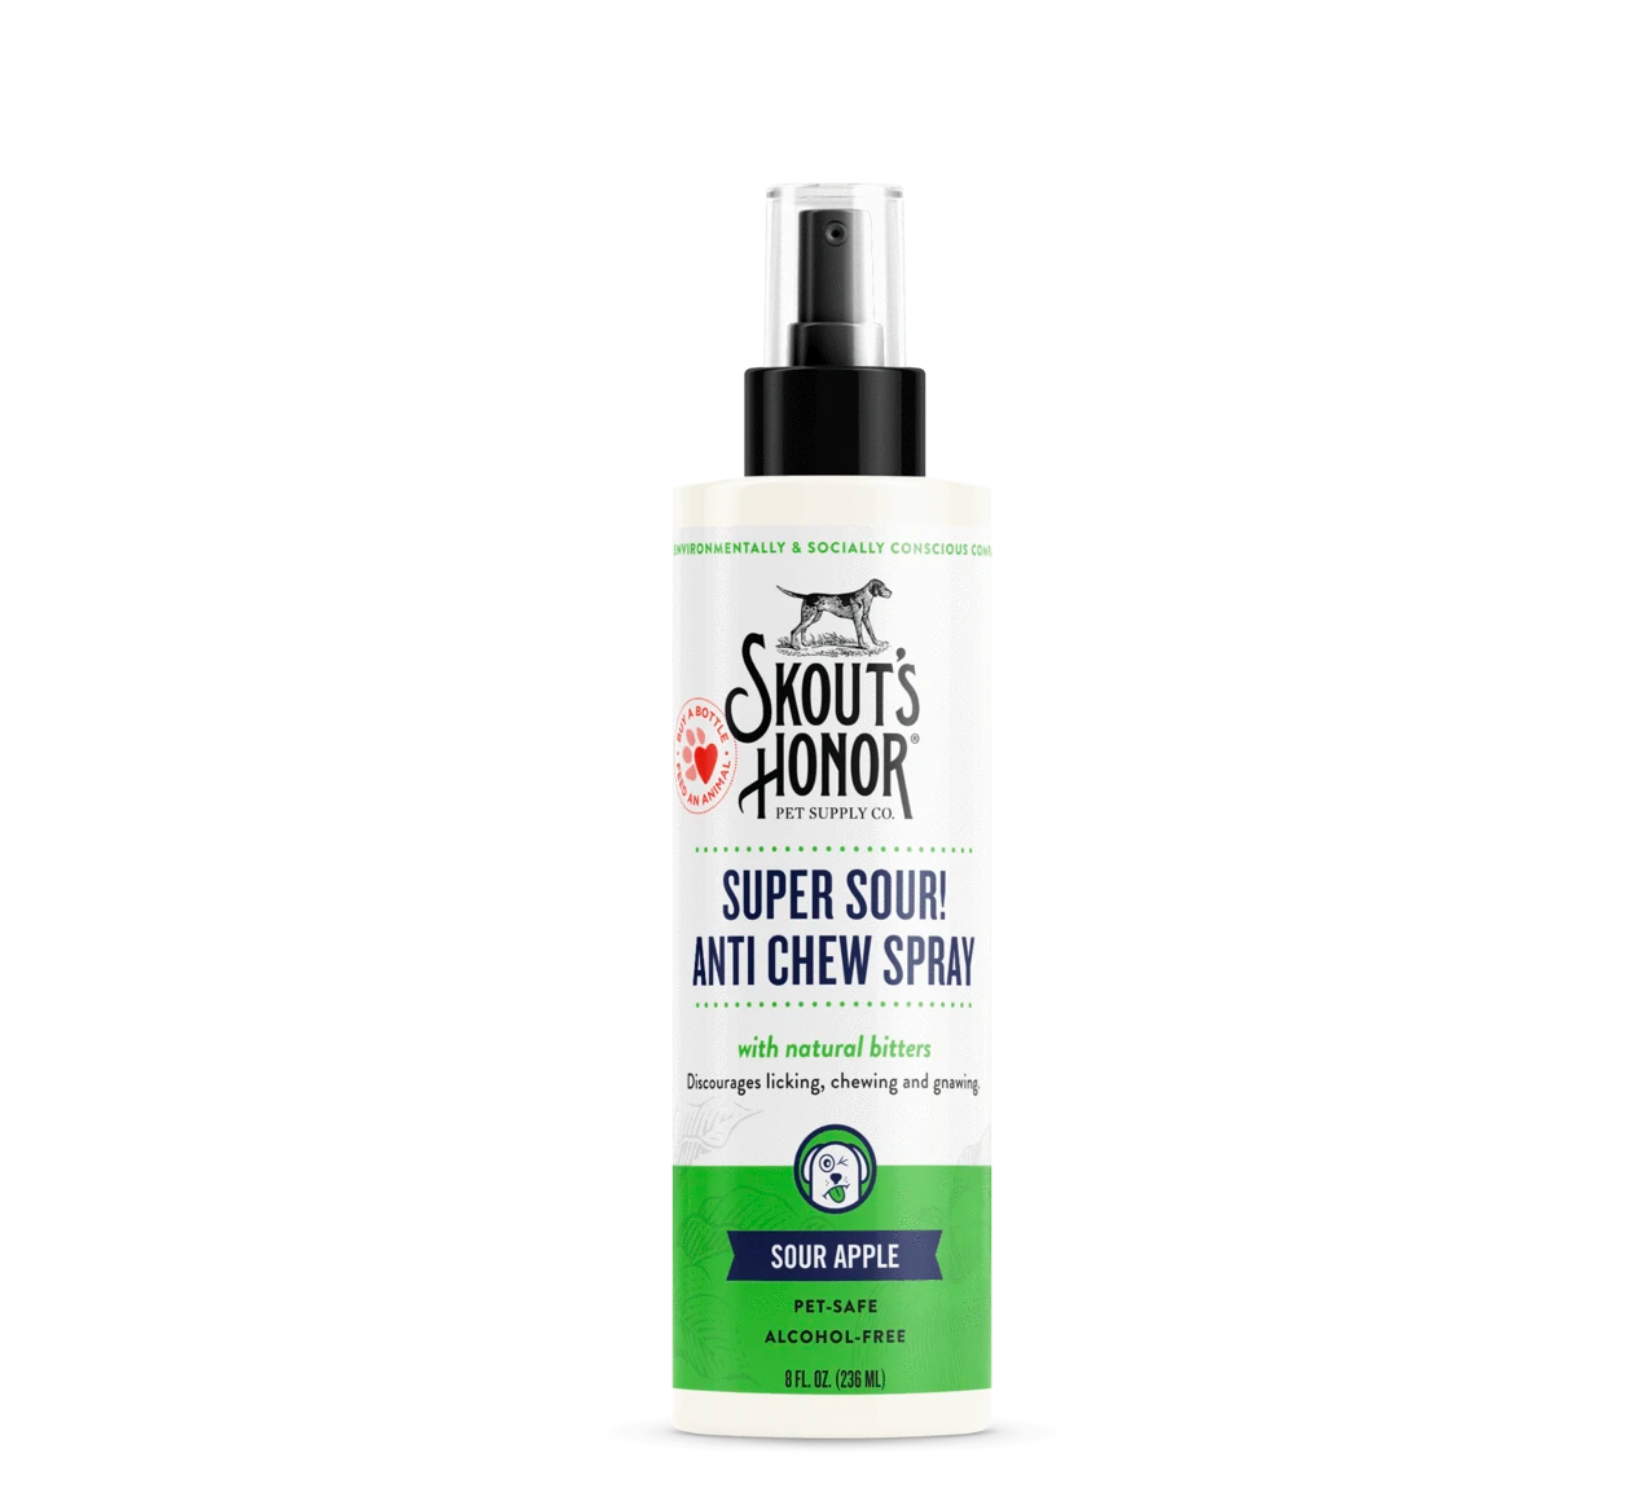 Skout's Honor | Super Sour! Anti Chew Spray